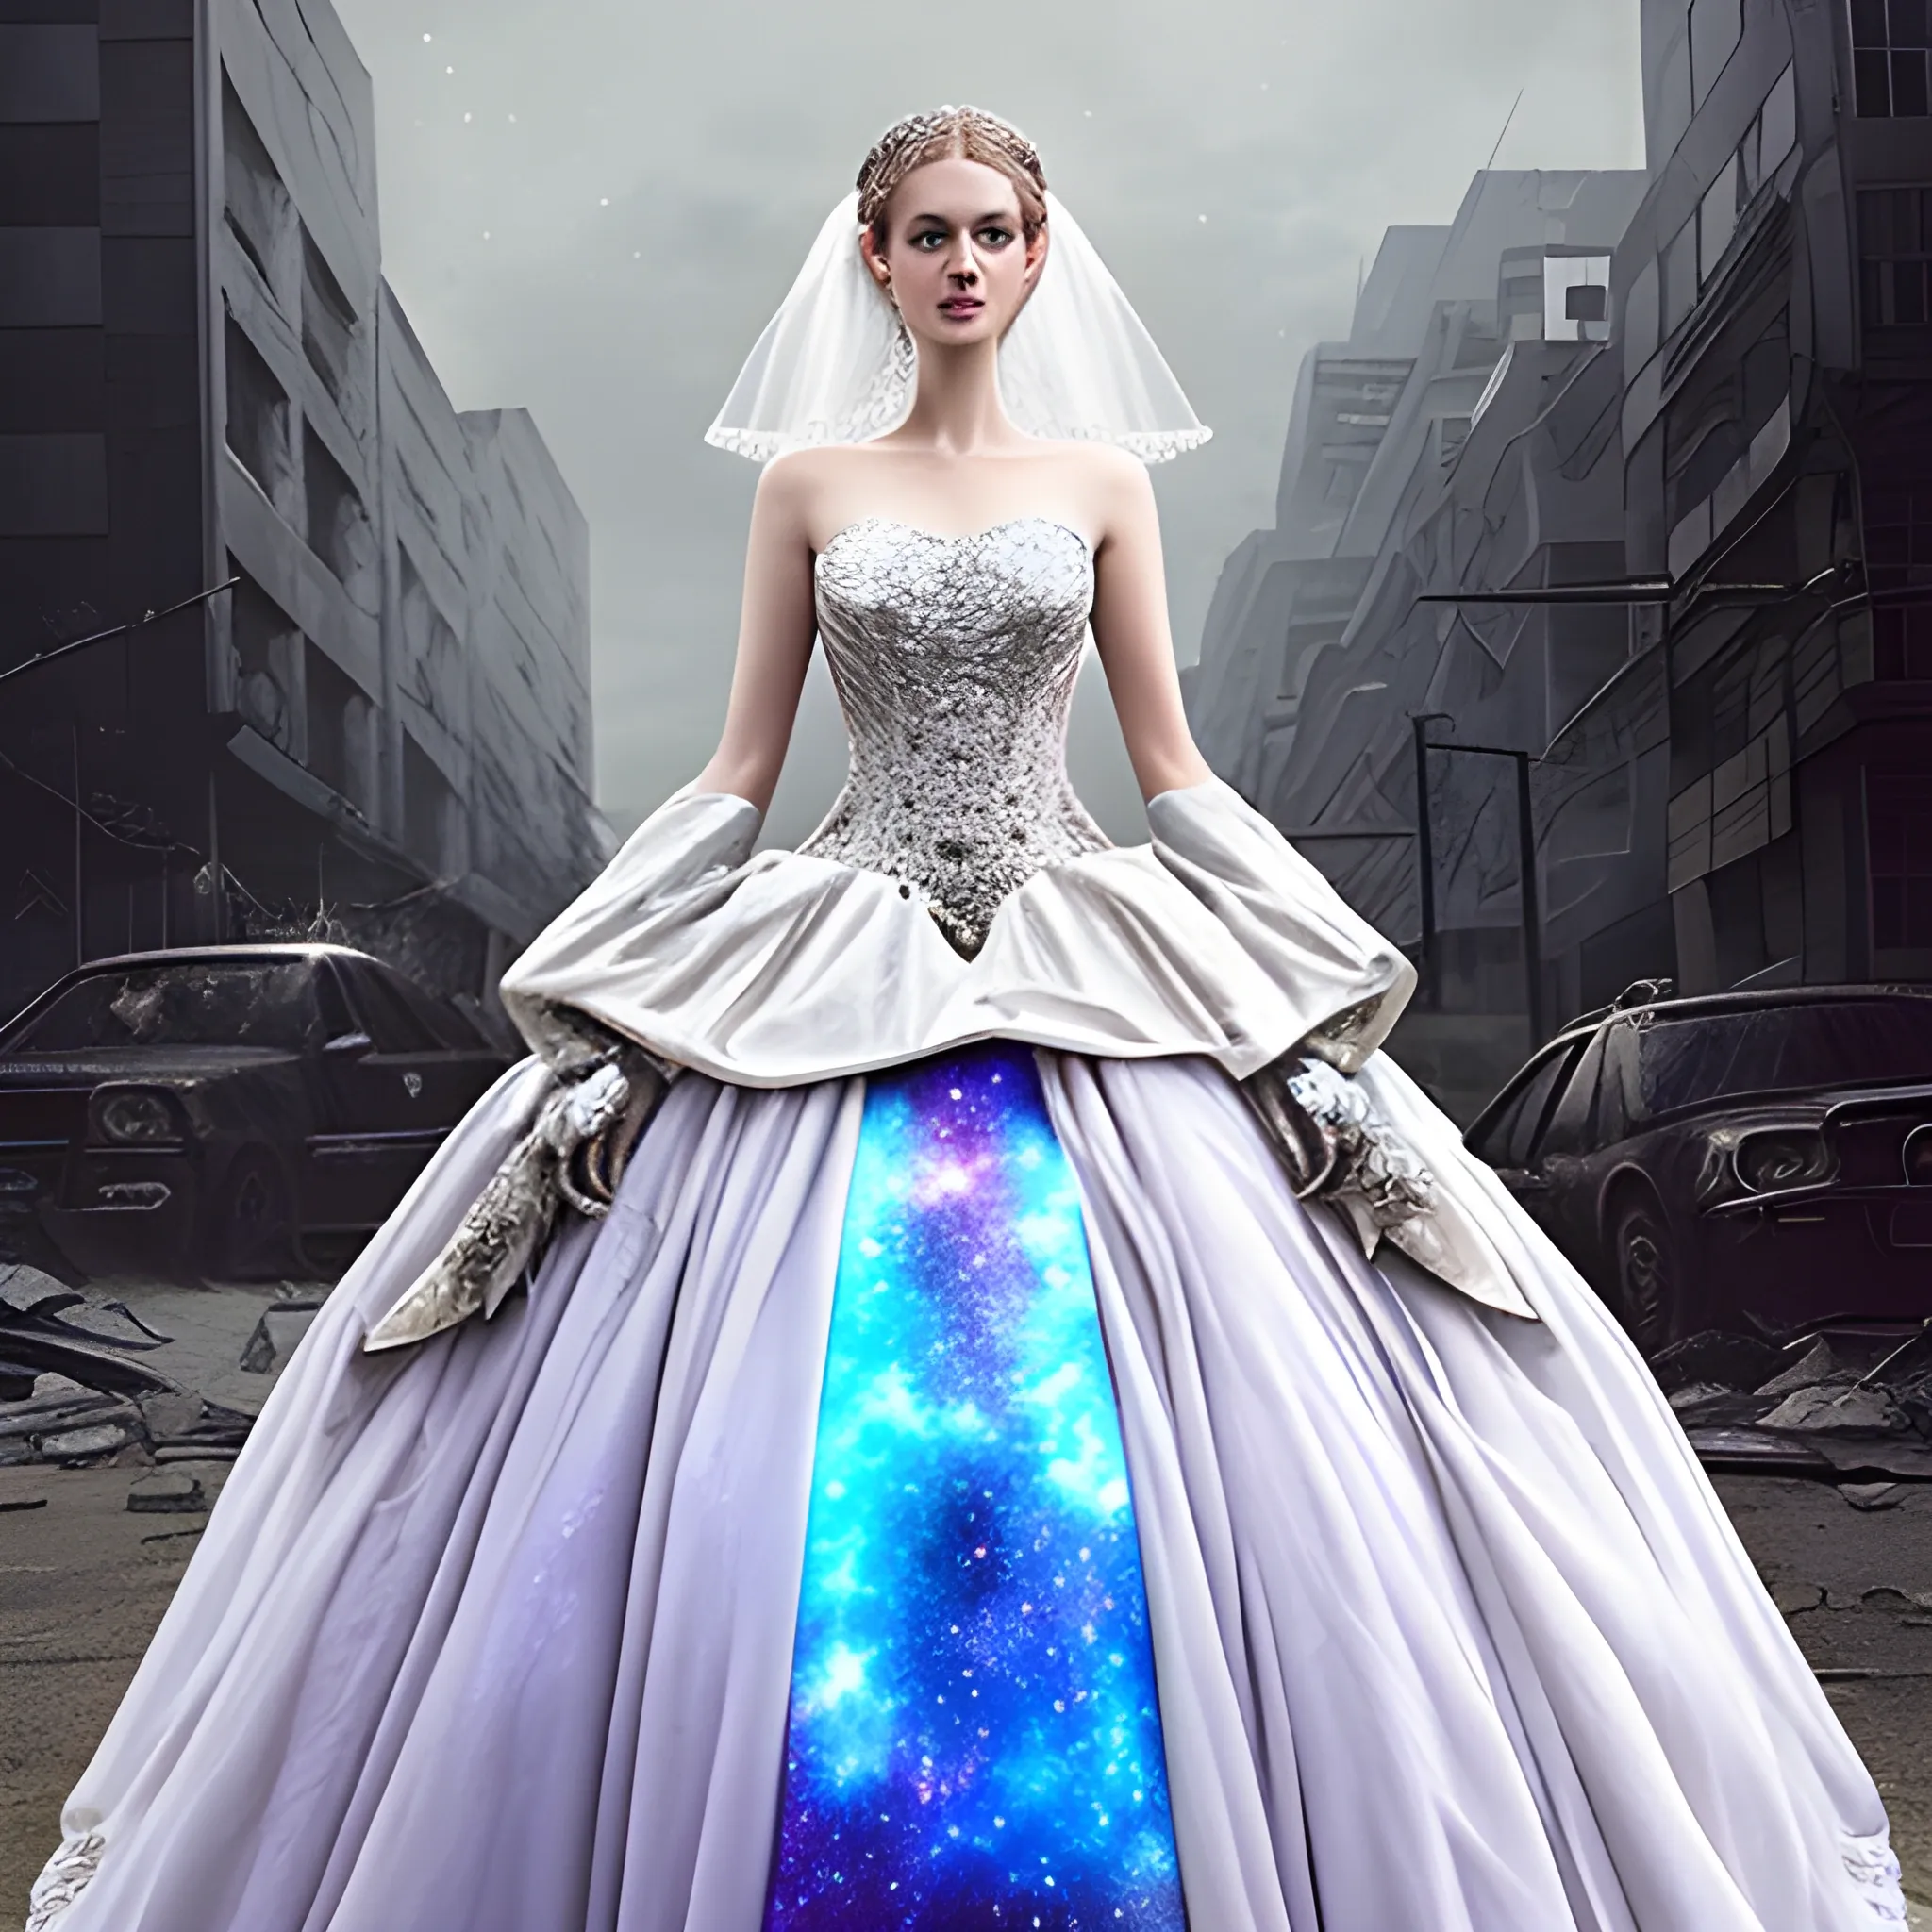 Fantasy Bridal Boutique - Dress & Attire - Kinnelon, NJ - WeddingWire